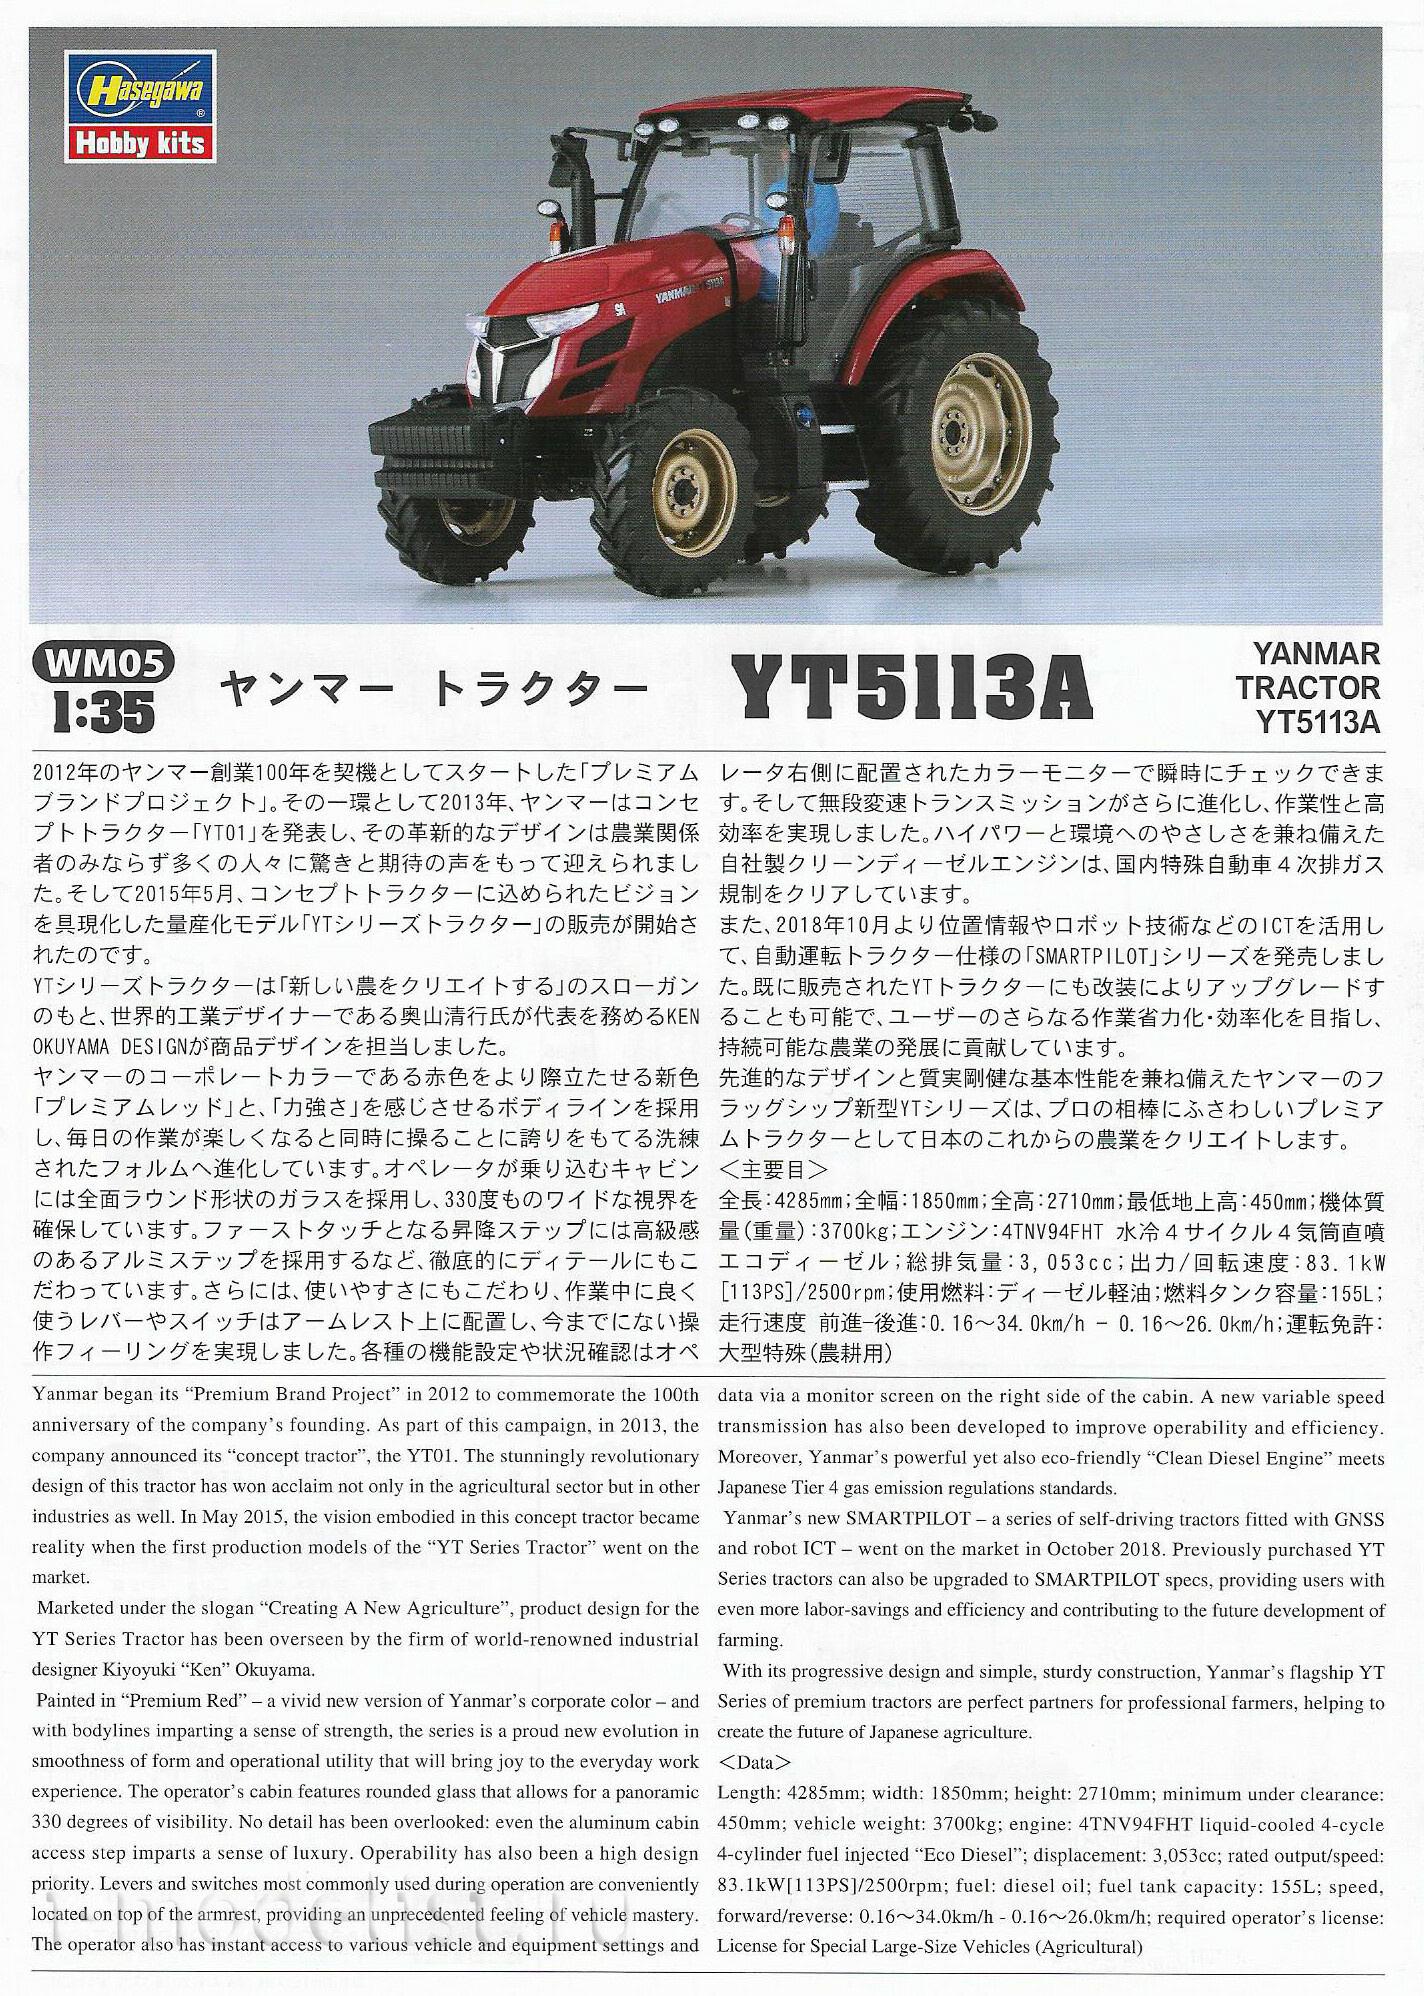 66005 Hasegawa 1/35 Трактор Yanmar YT5113A